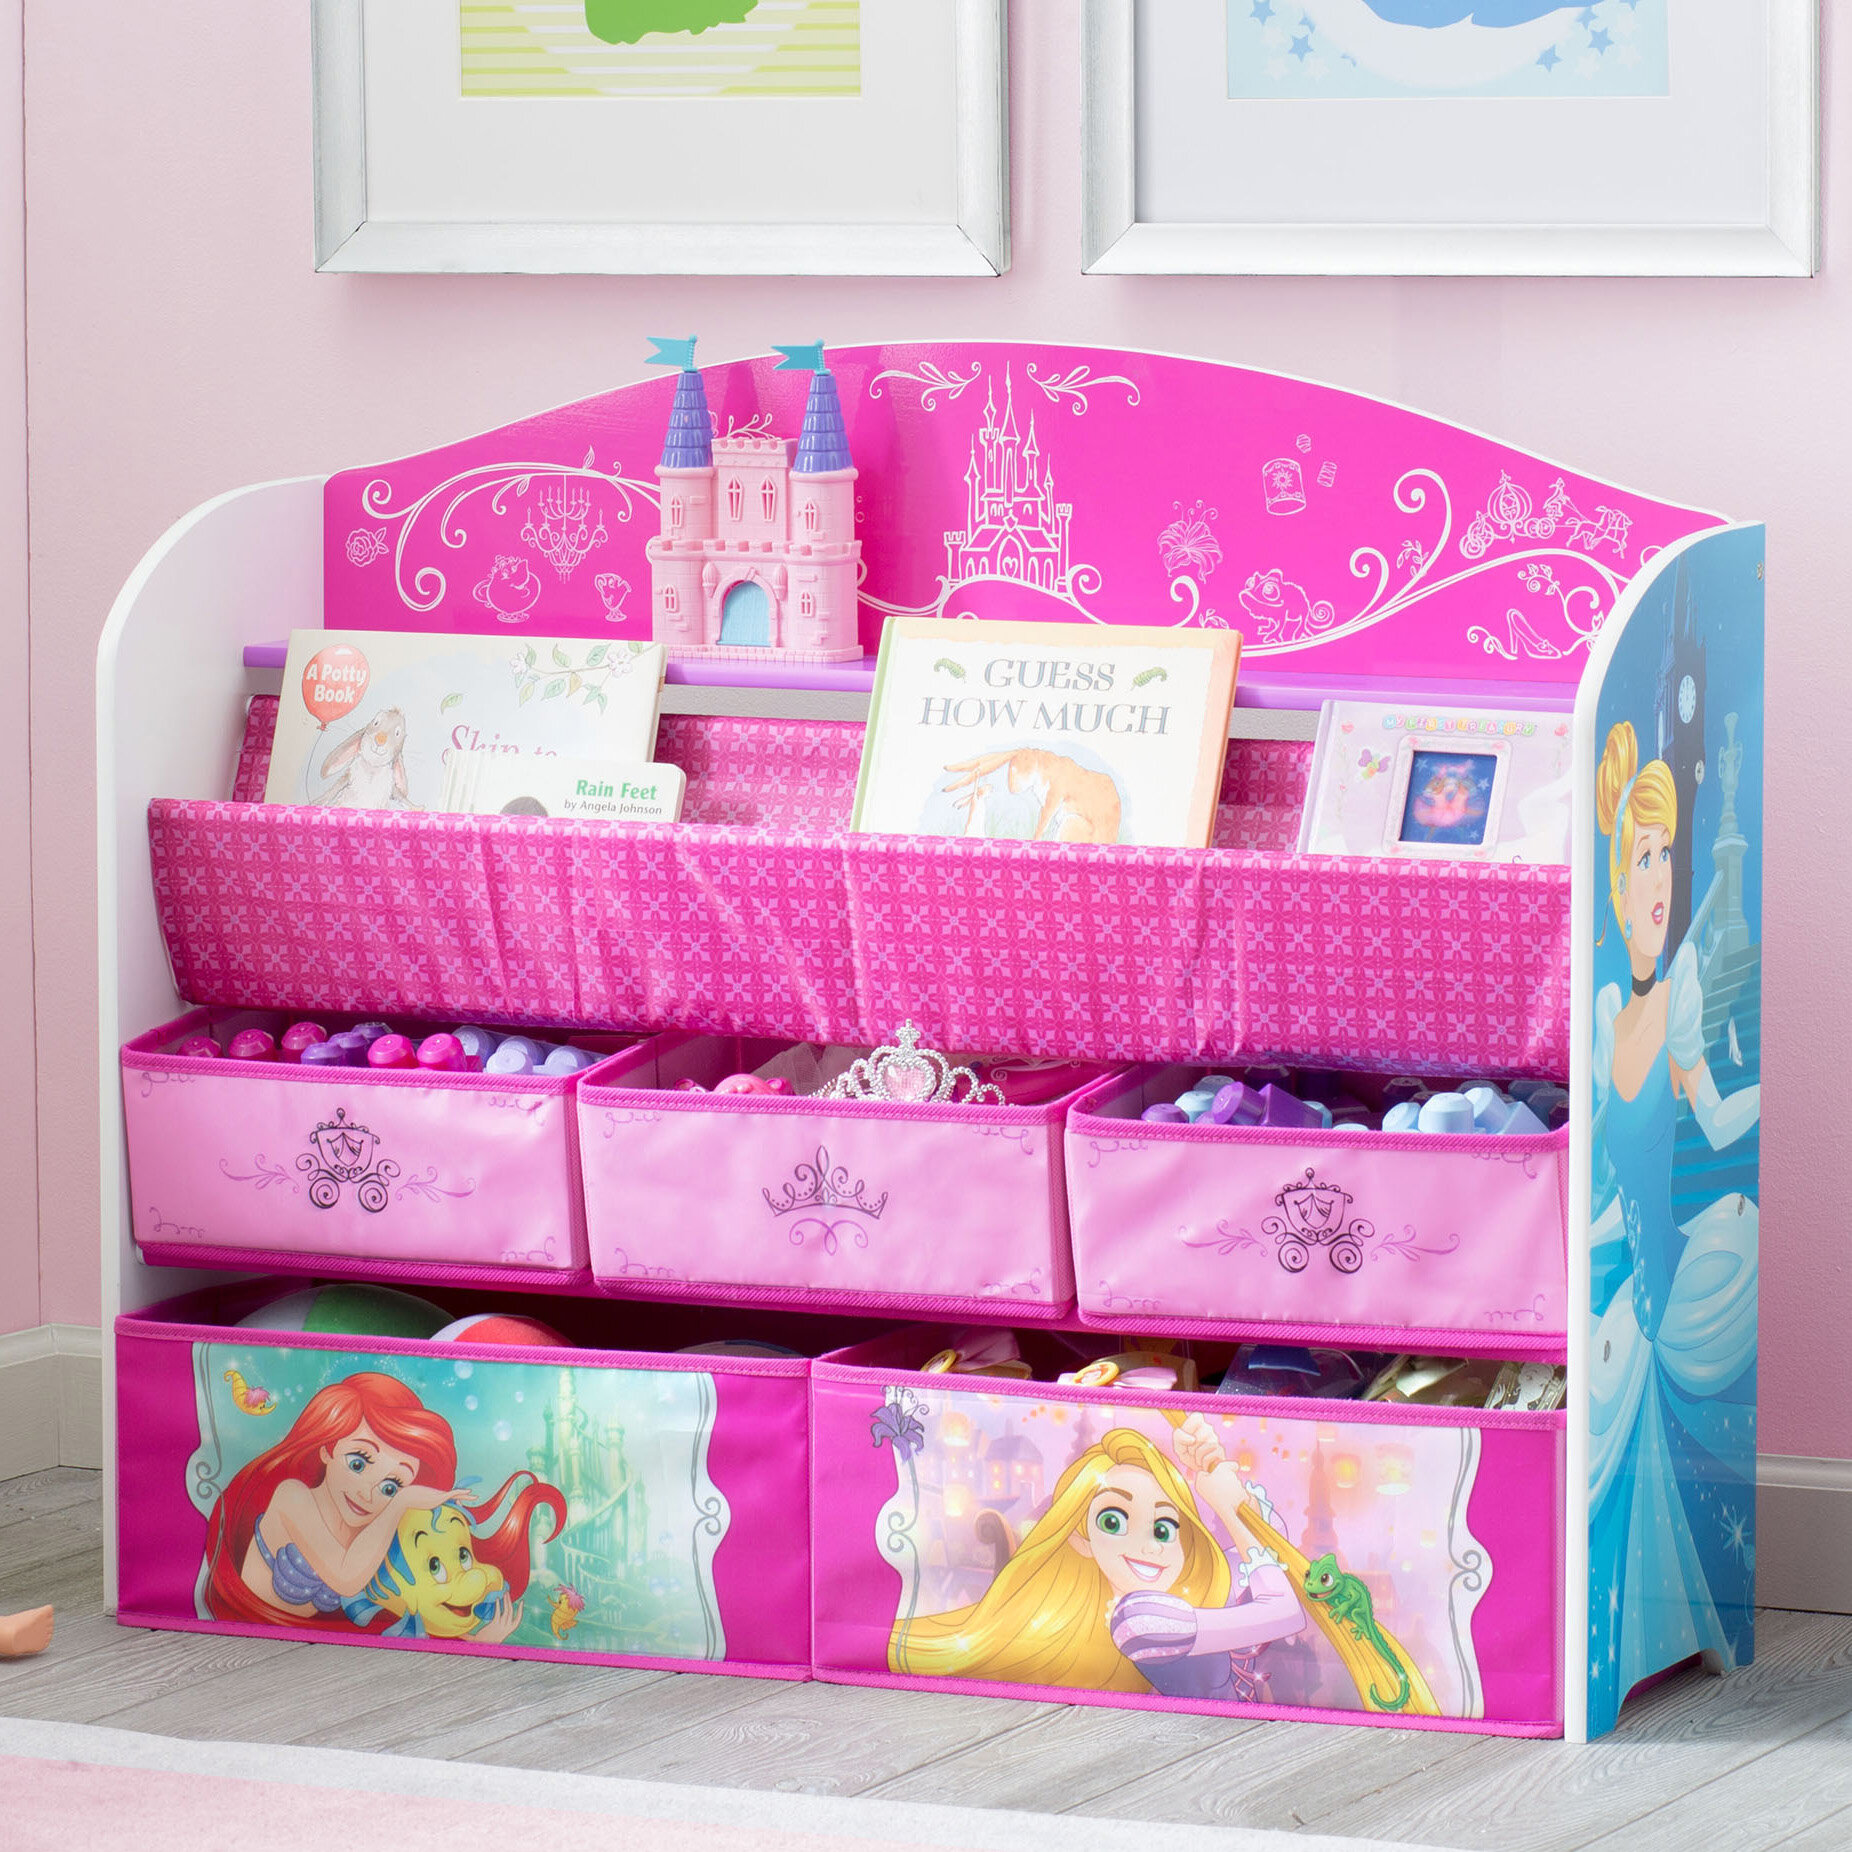 Delta Children Disney Princess Deluxe Book Toy Organizer Reviews